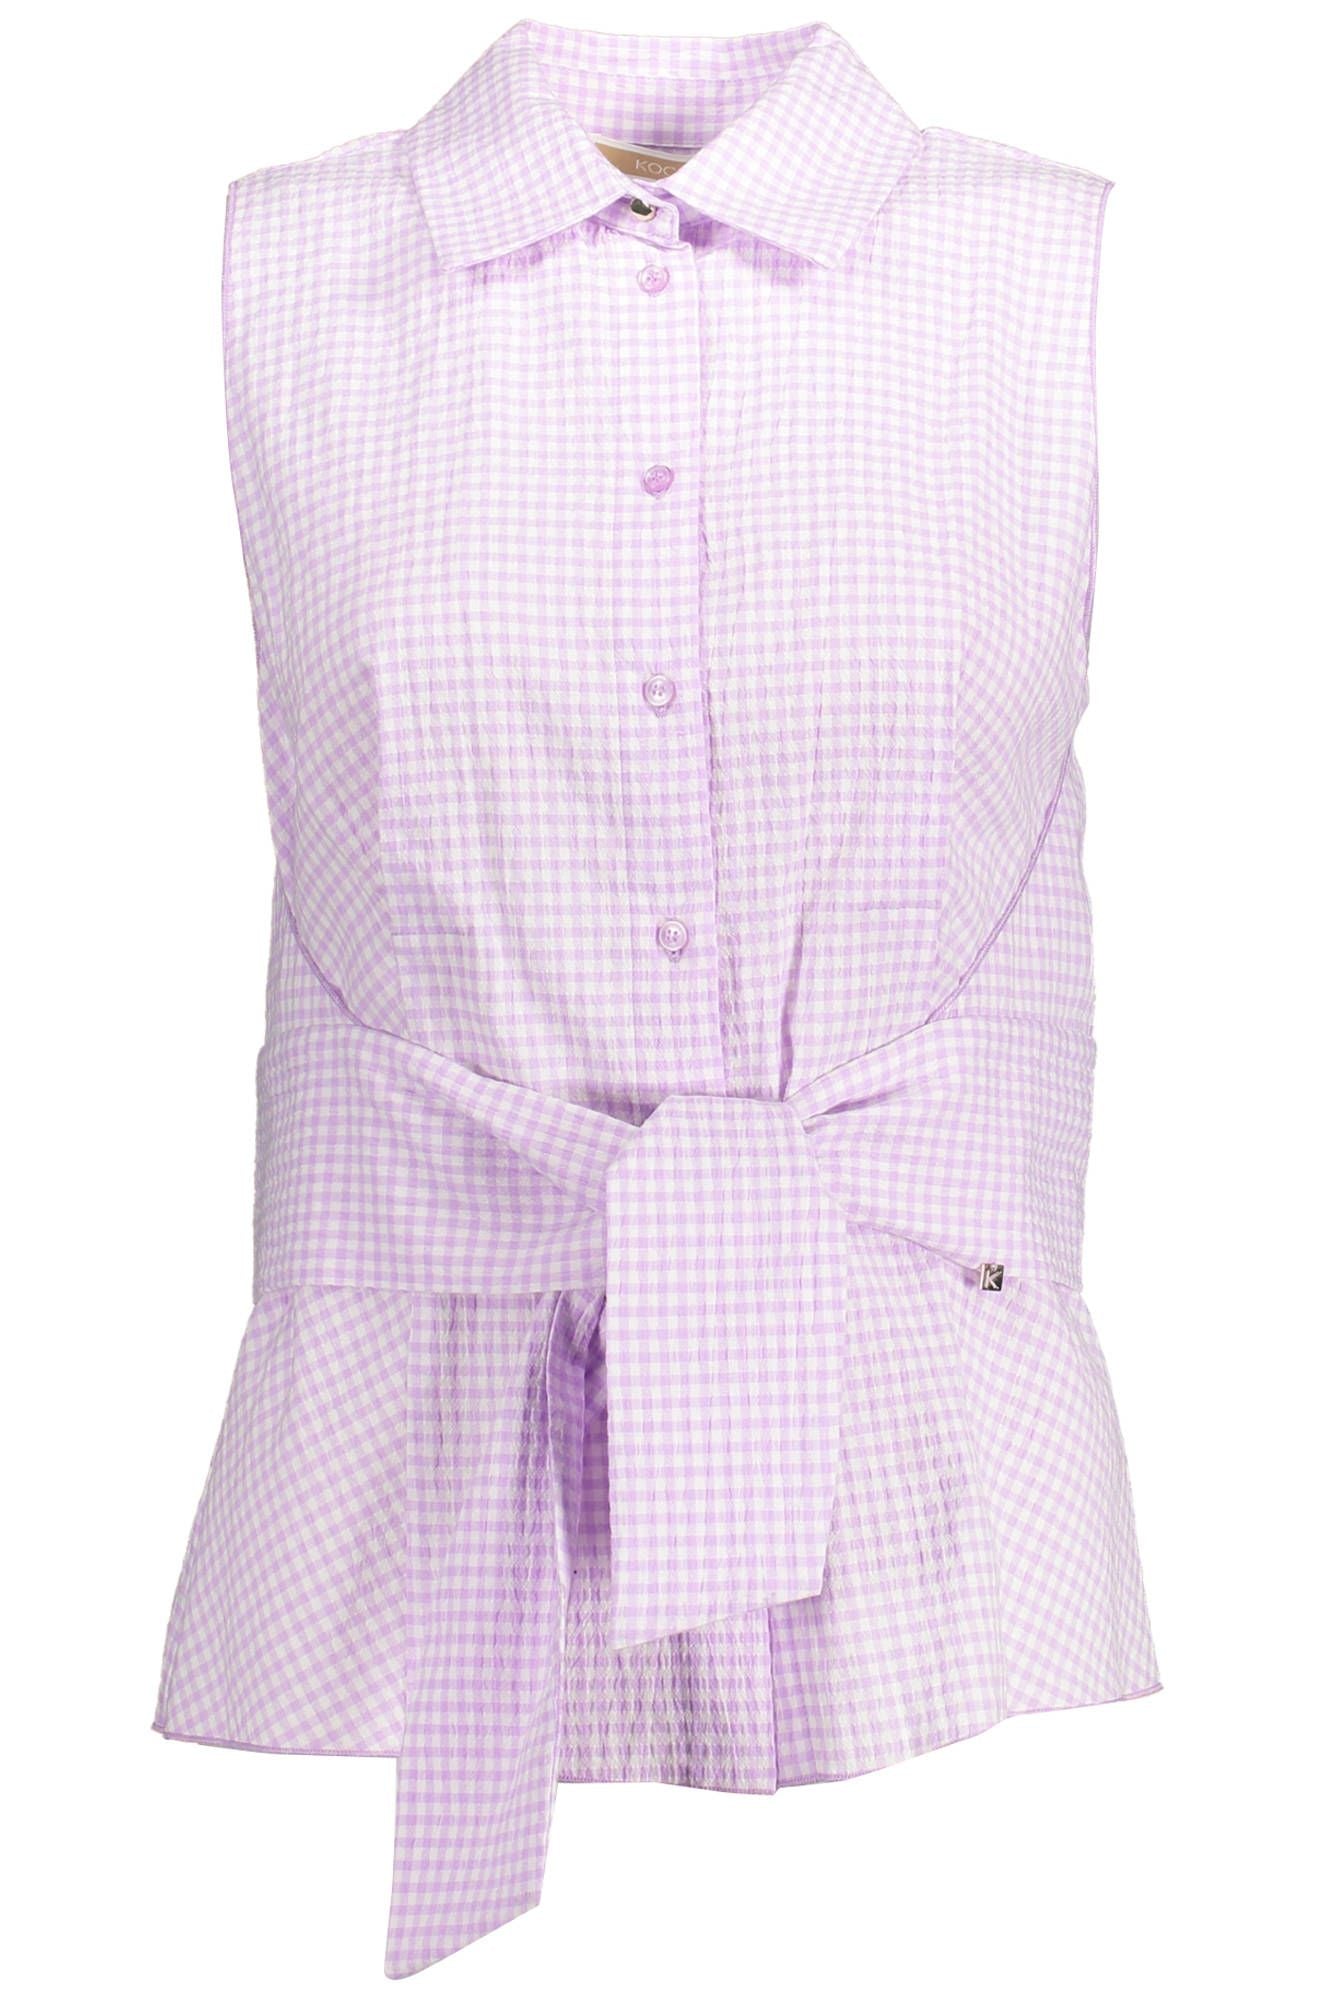 Elegant Sleeveless Pink Shirt with Italian Collar